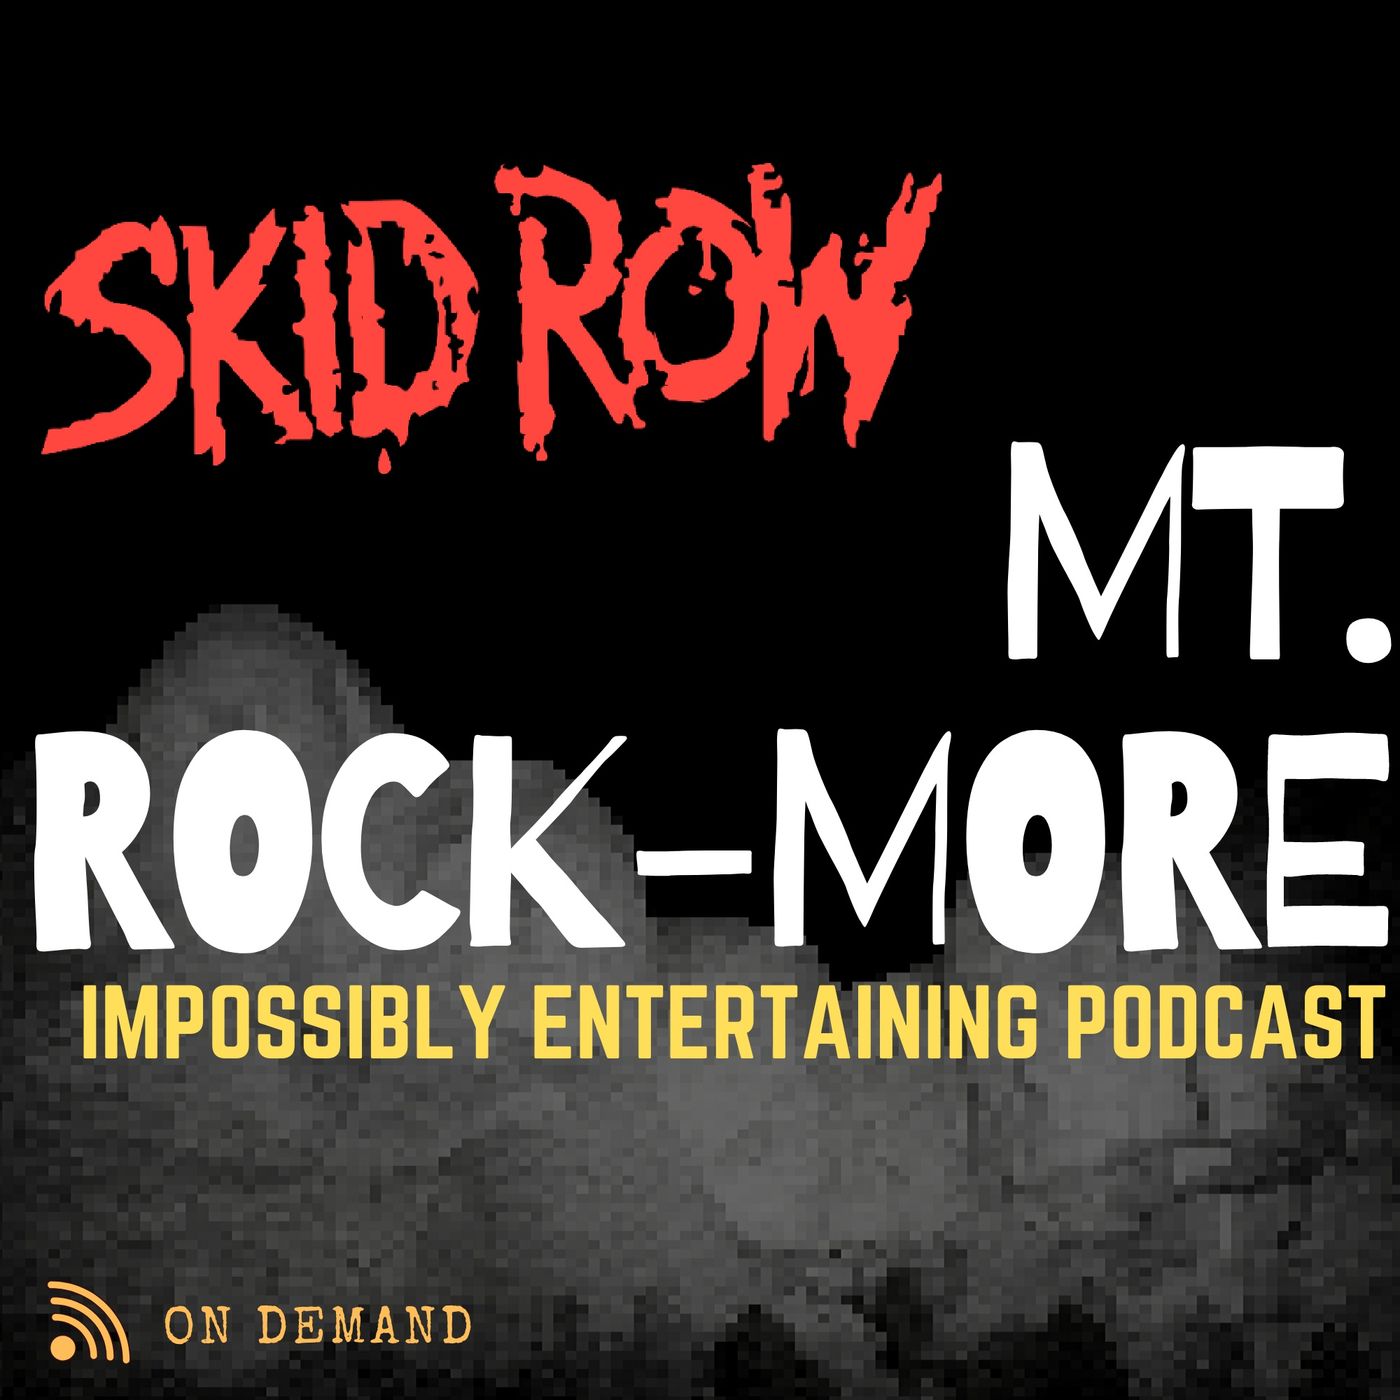 MT. ROCKMORE | Season 1 | Episode #13: Skid Row